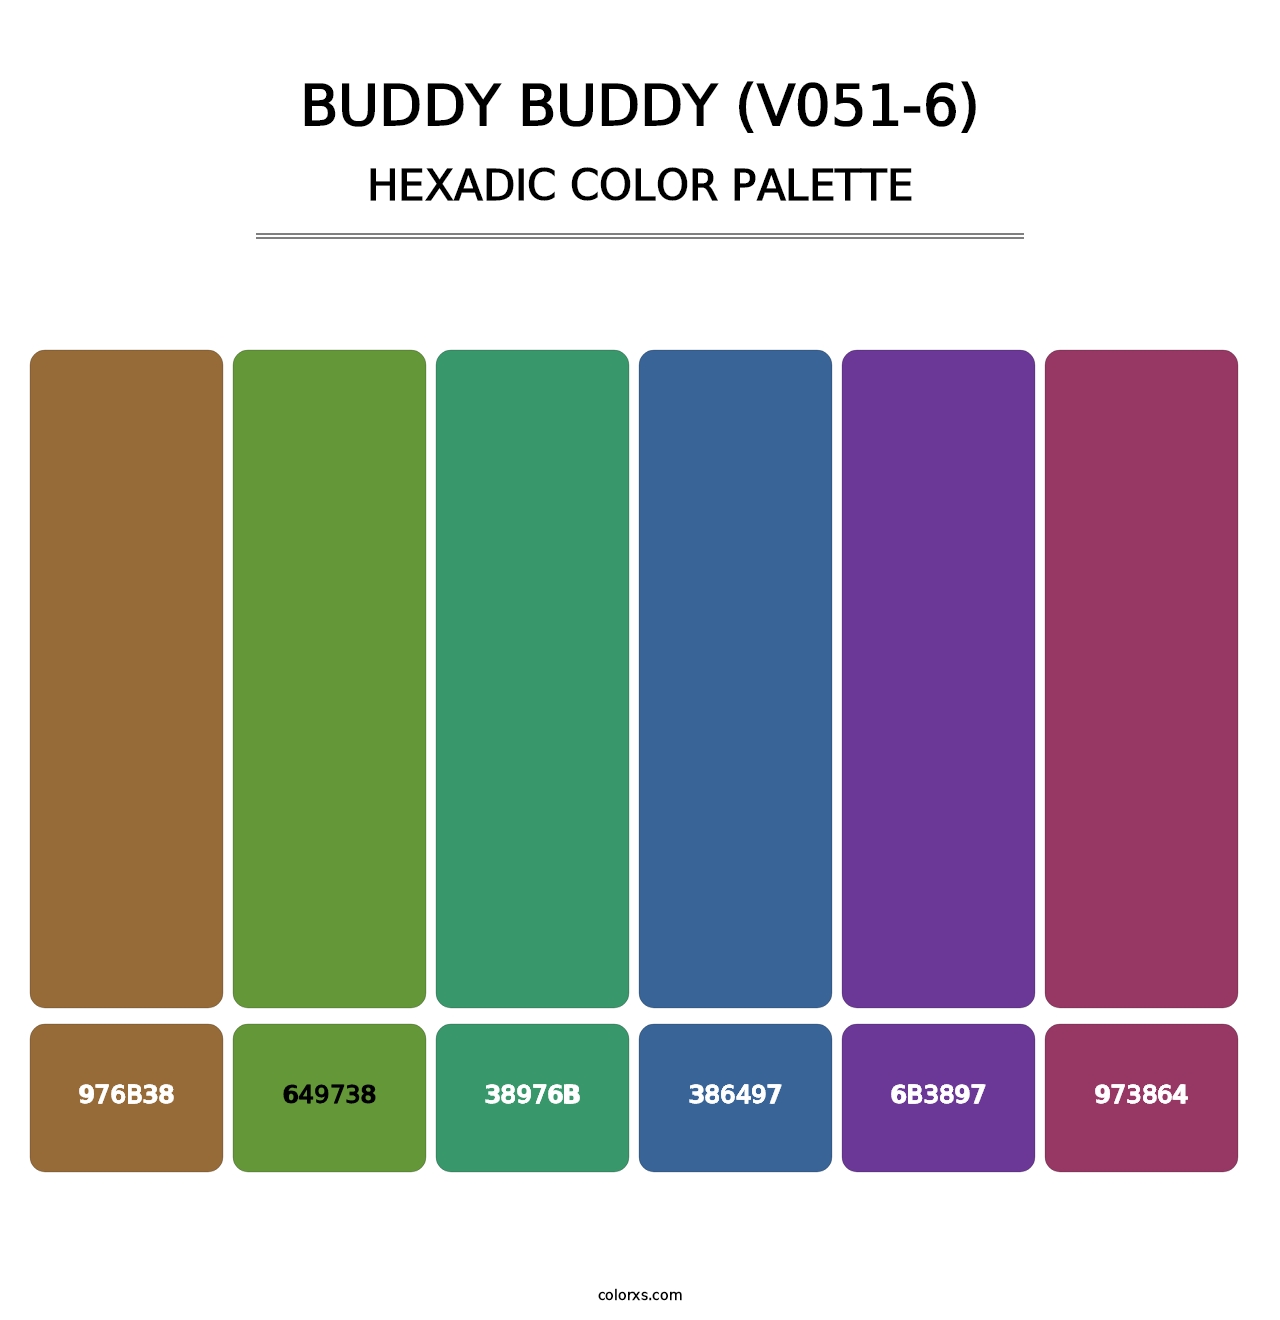 Buddy Buddy (V051-6) - Hexadic Color Palette